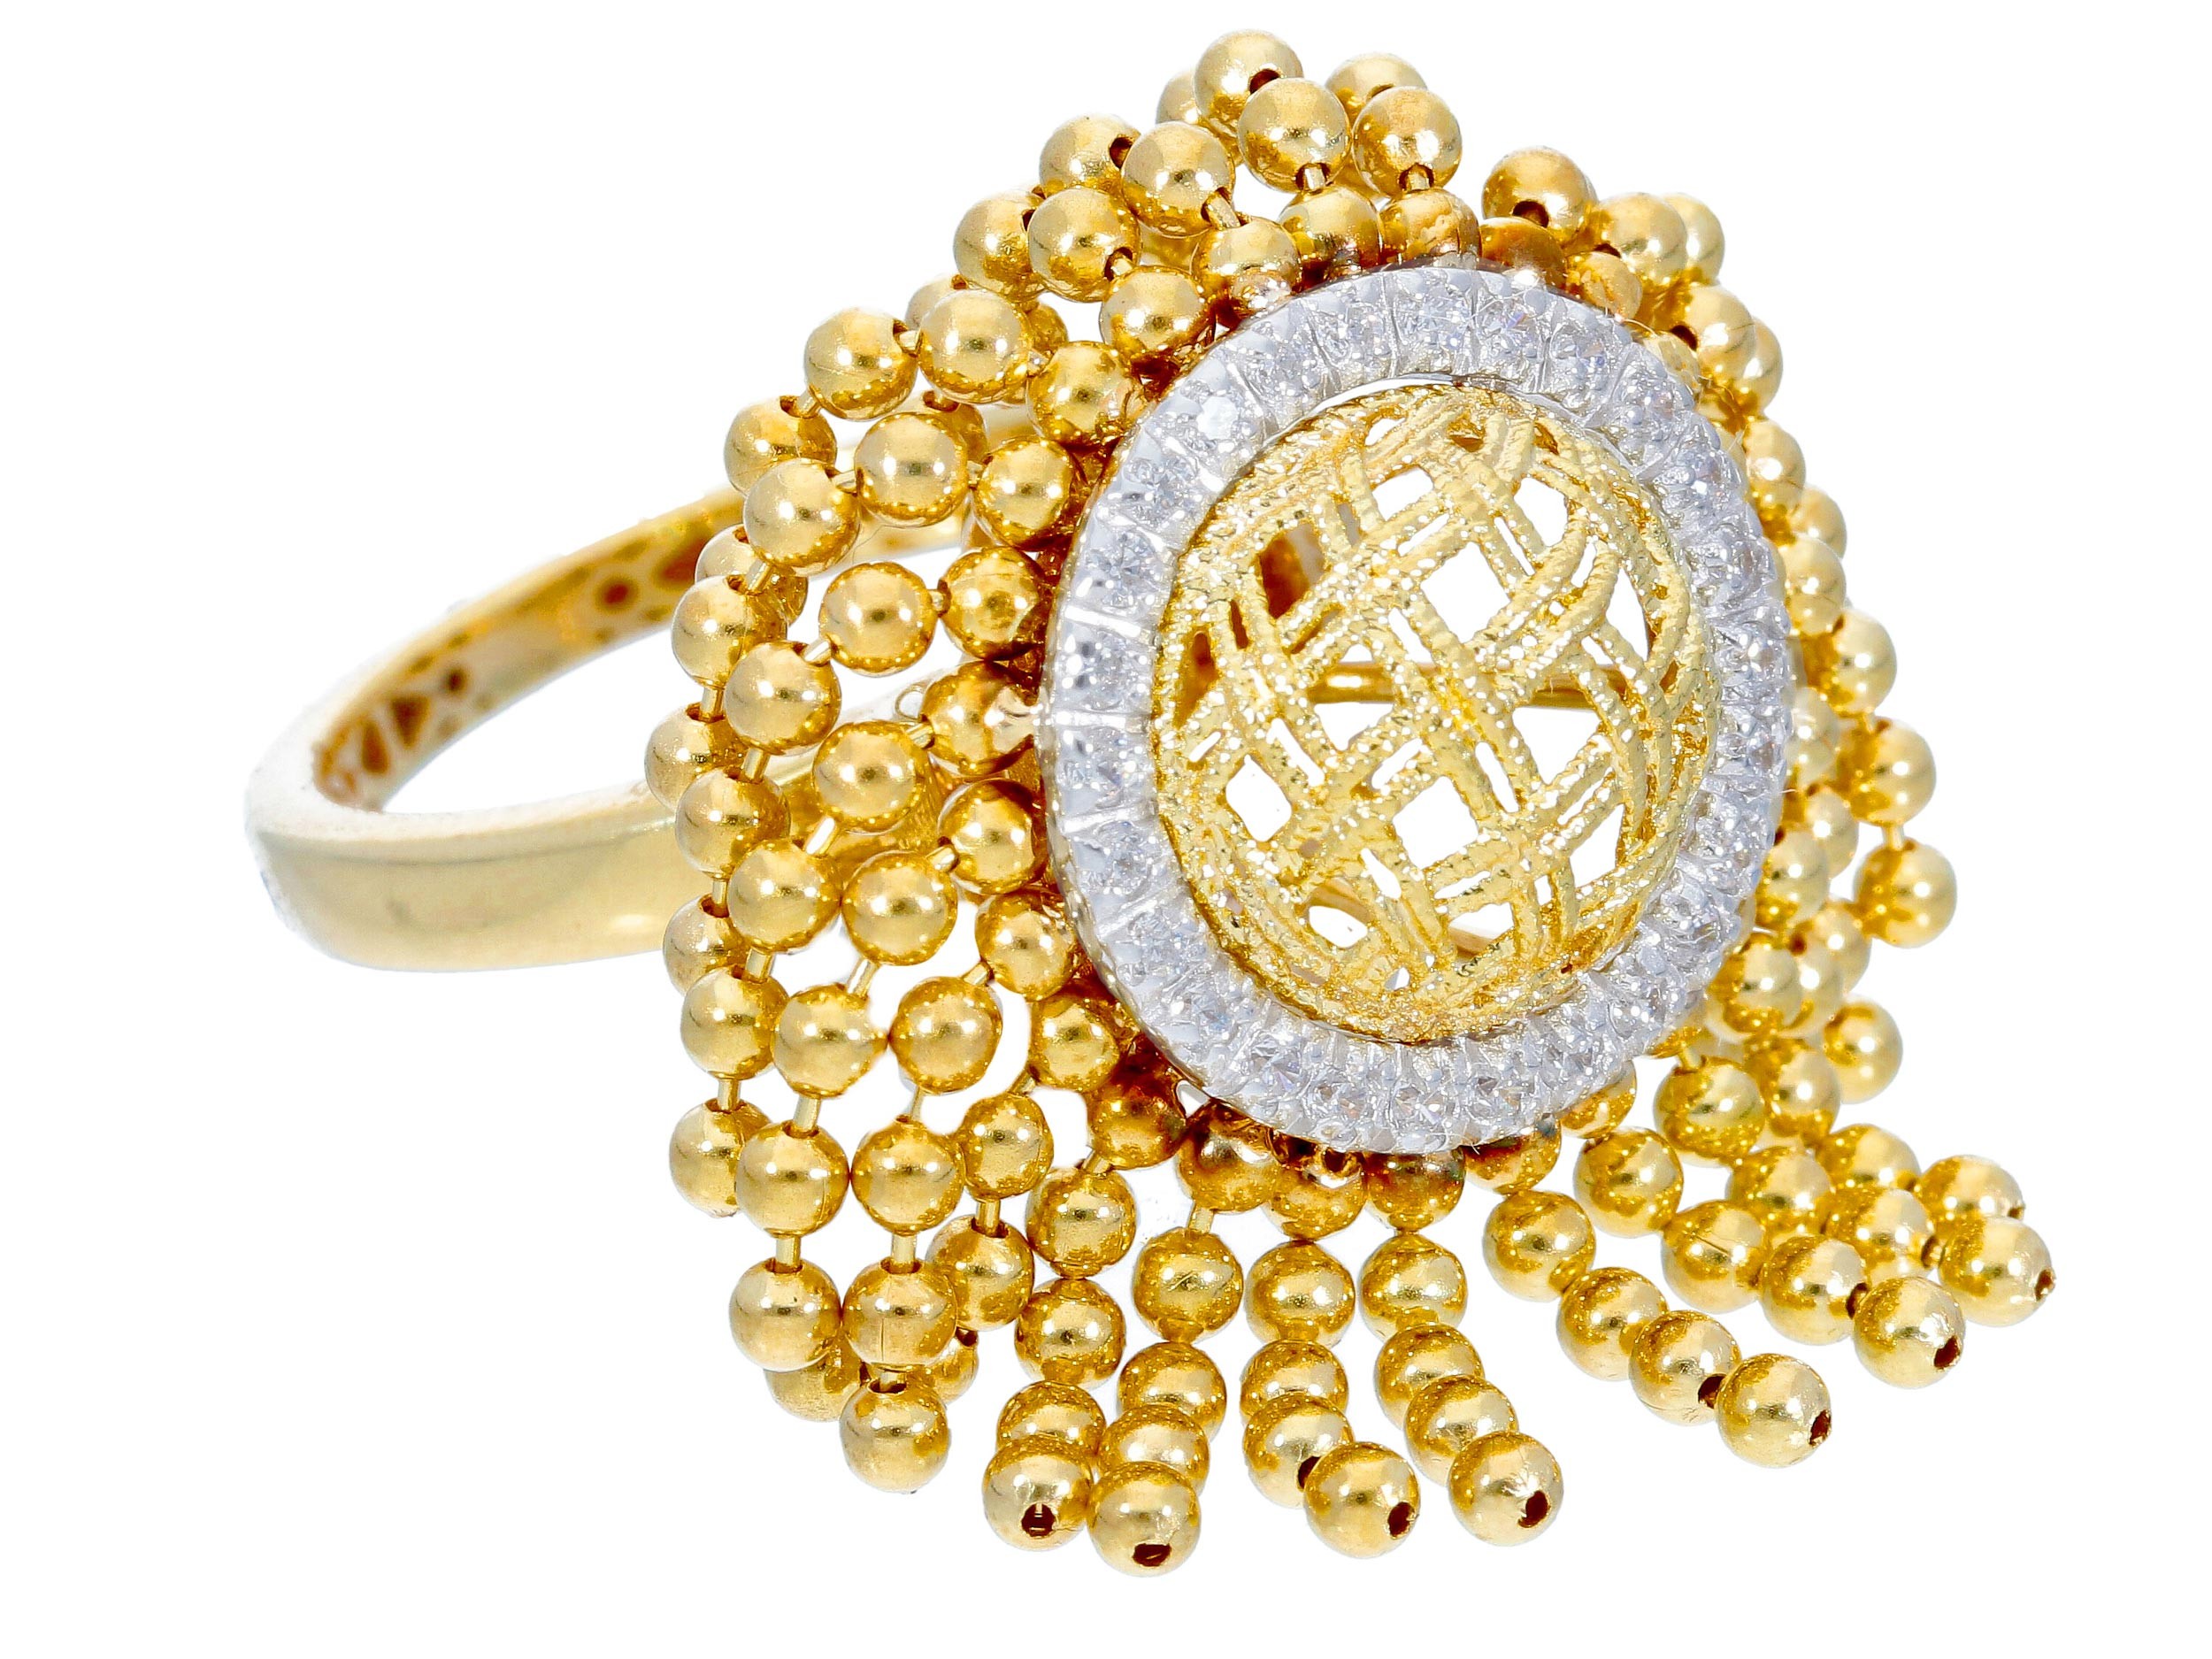 Beautiful 18ct Yellow Gold Ring